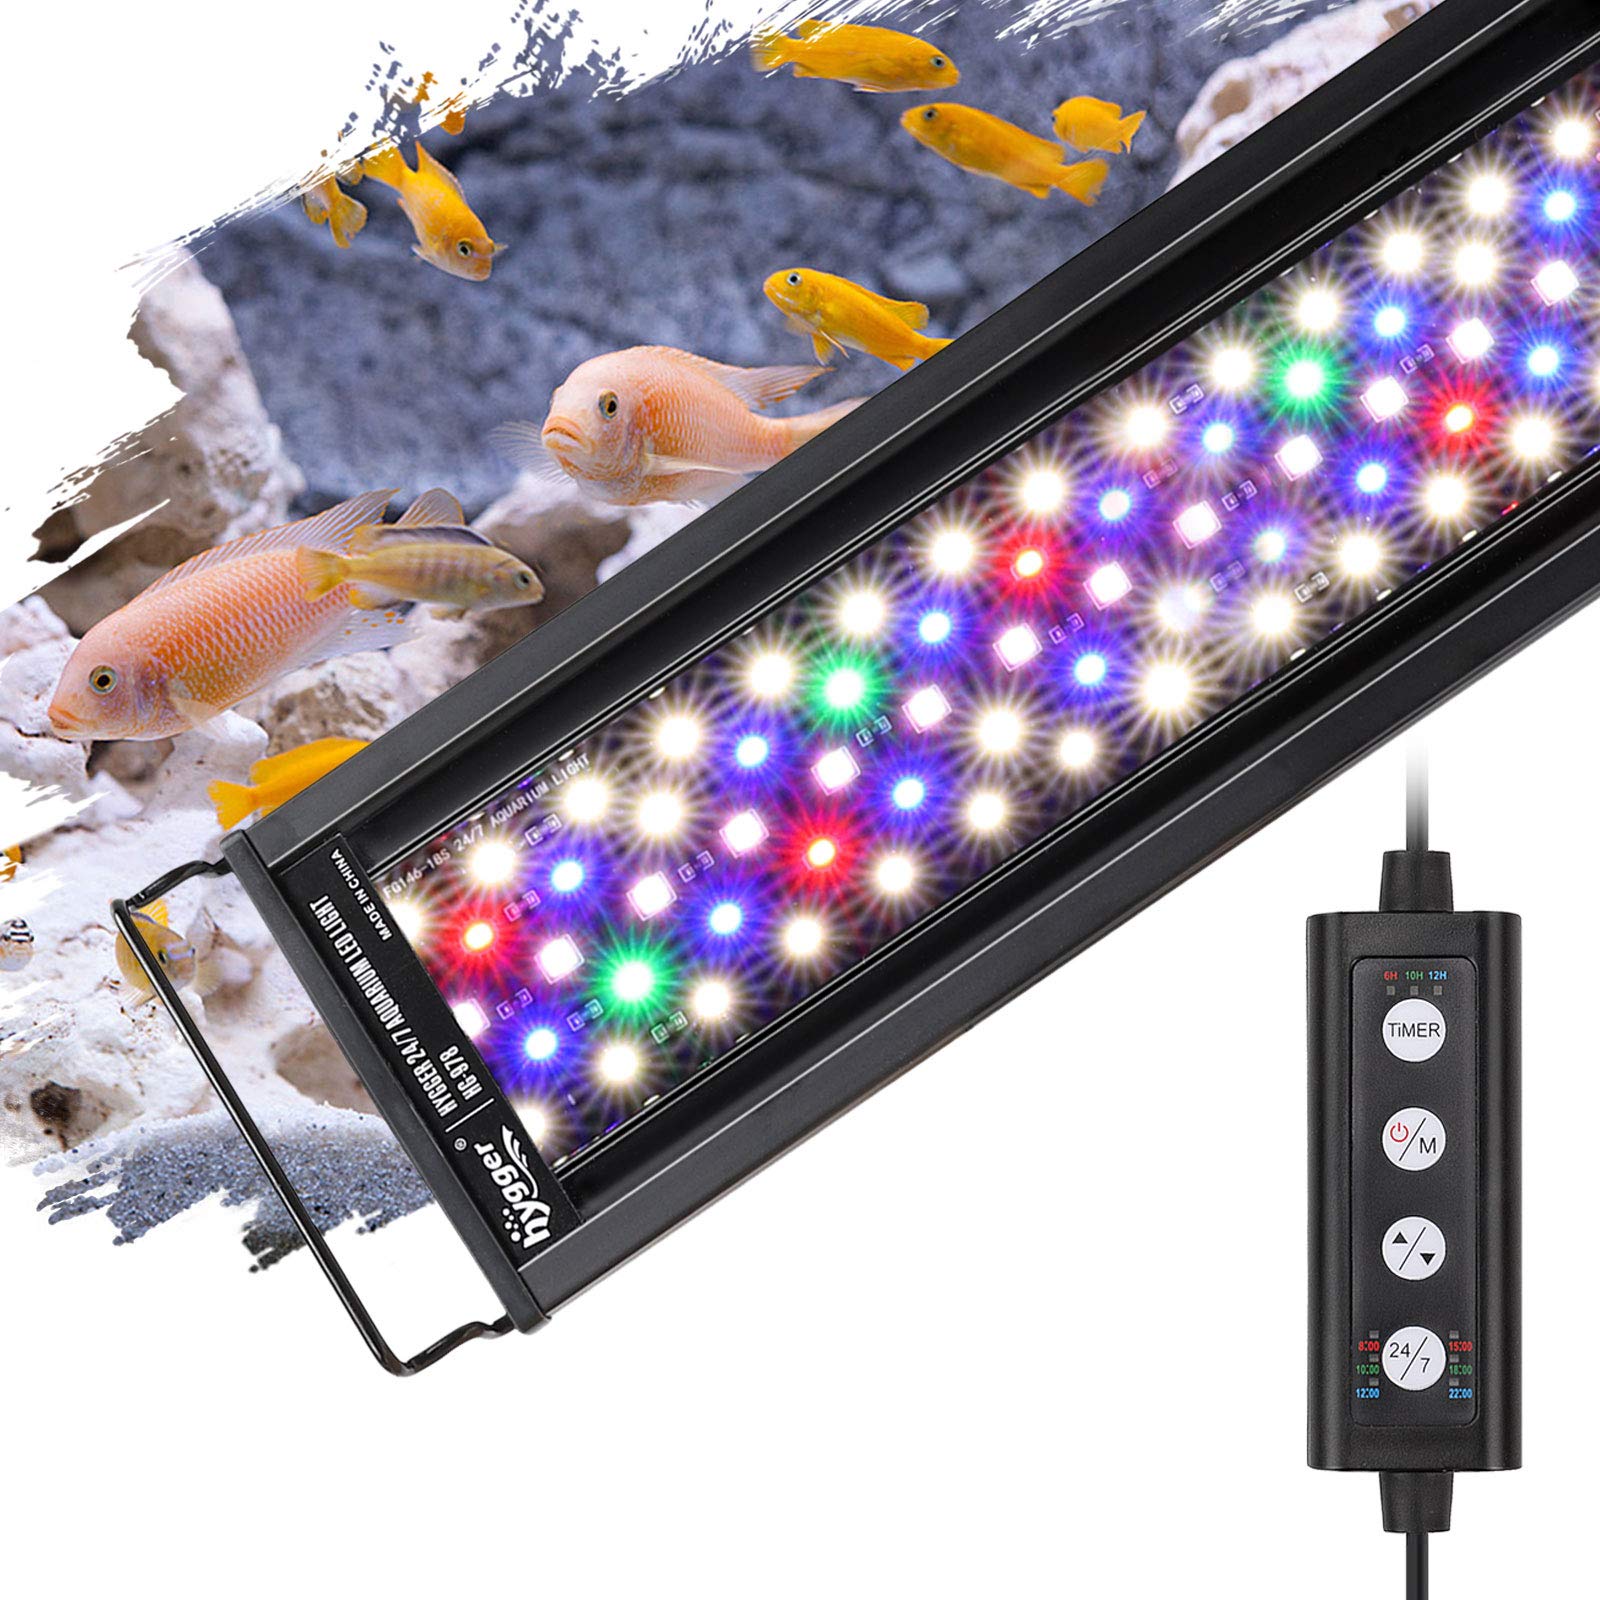 Hygger 22W LED Aquarium Light: Sunrise-Daylight-Moonlight Mode, DIY, Timer, Adjustable Brightness